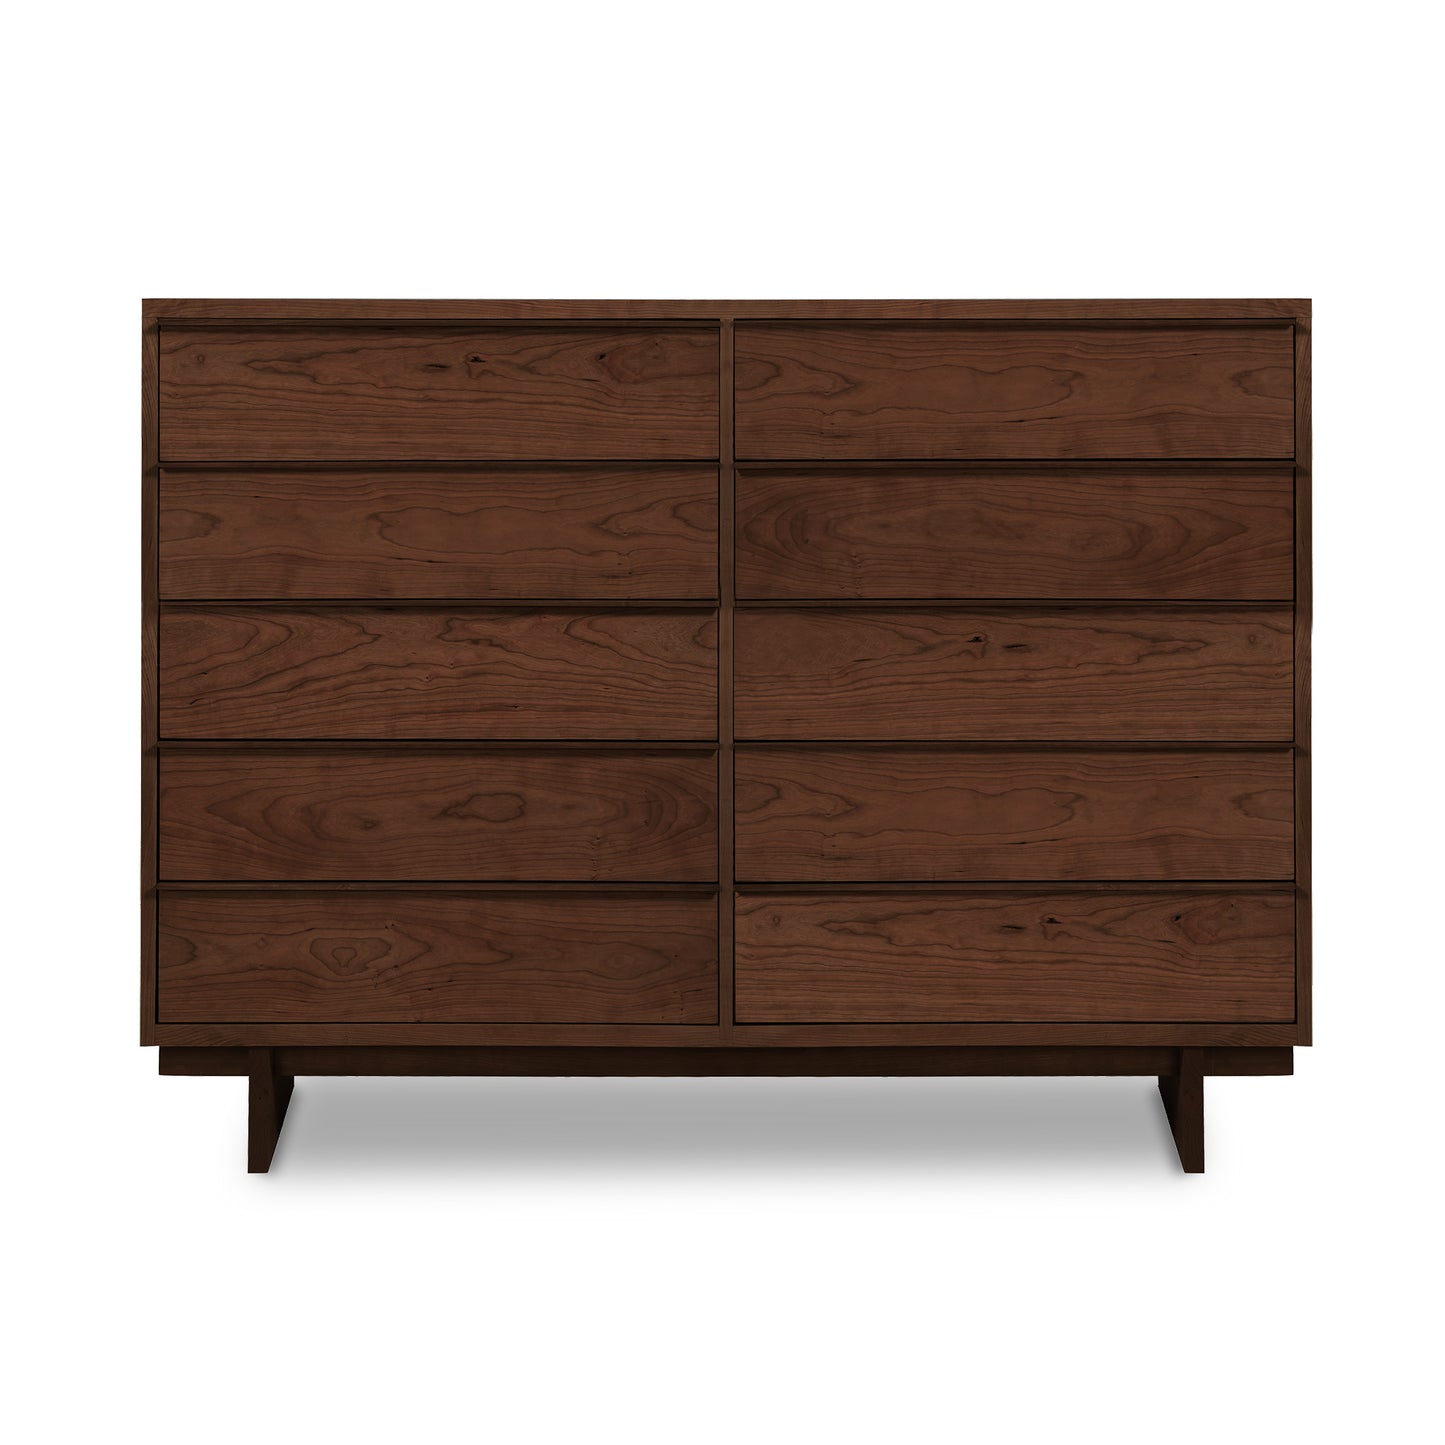 A Vermont Furniture Designs Kipling 10-Drawer Dresser on a plain background.